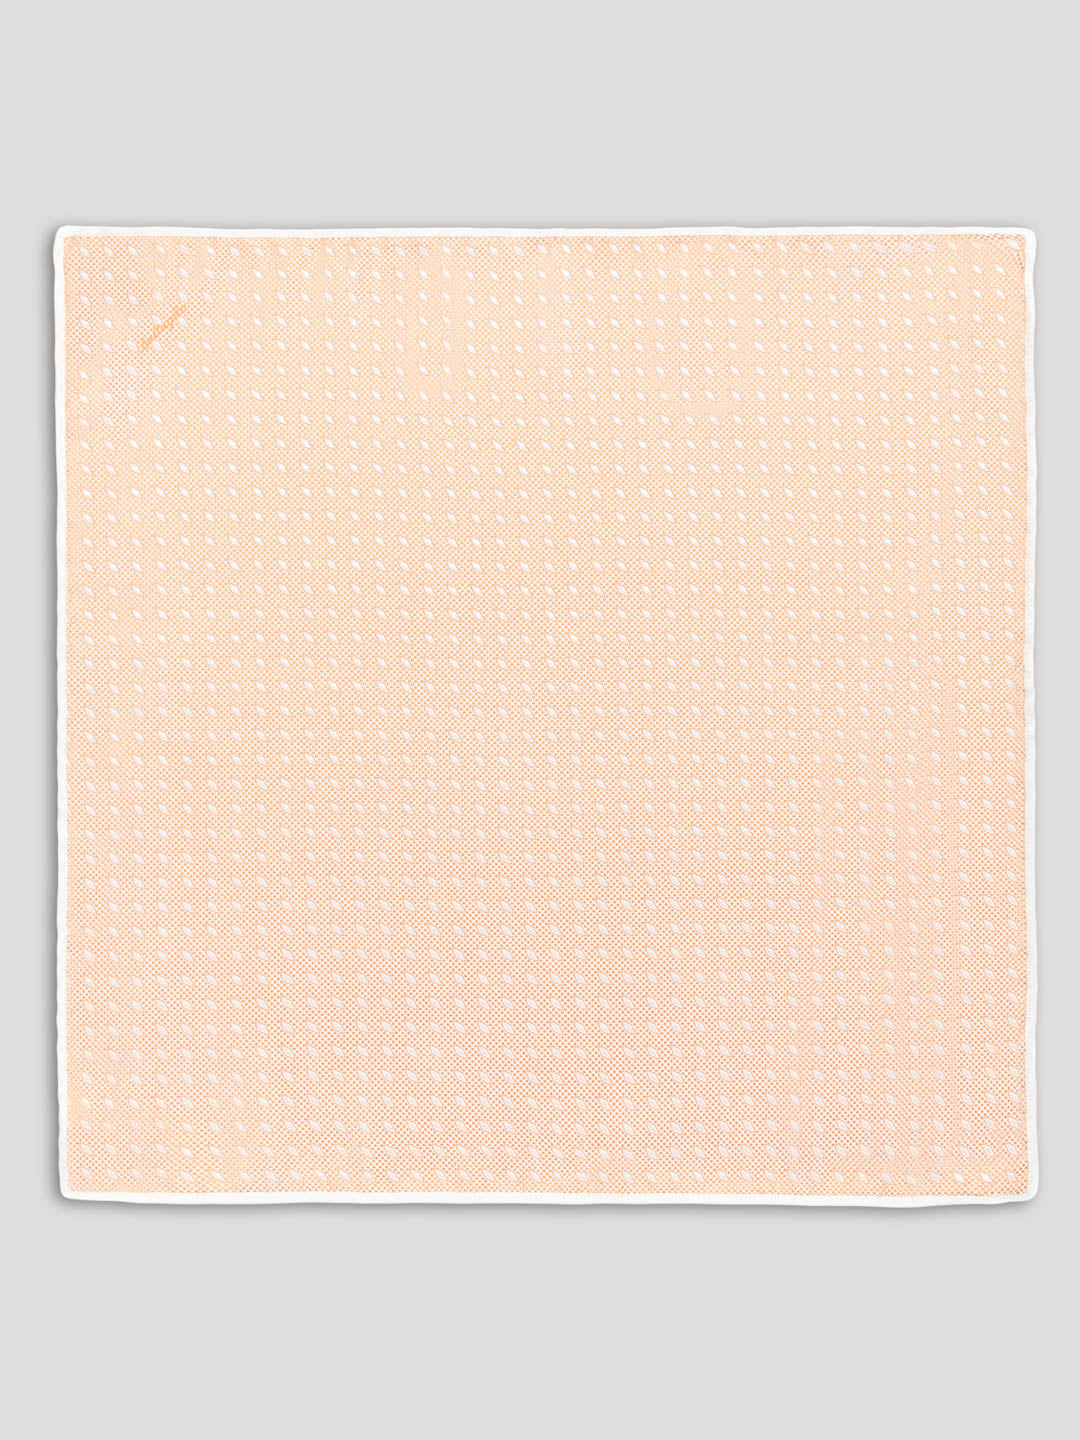 Peach handkerchief with white diamond details. 